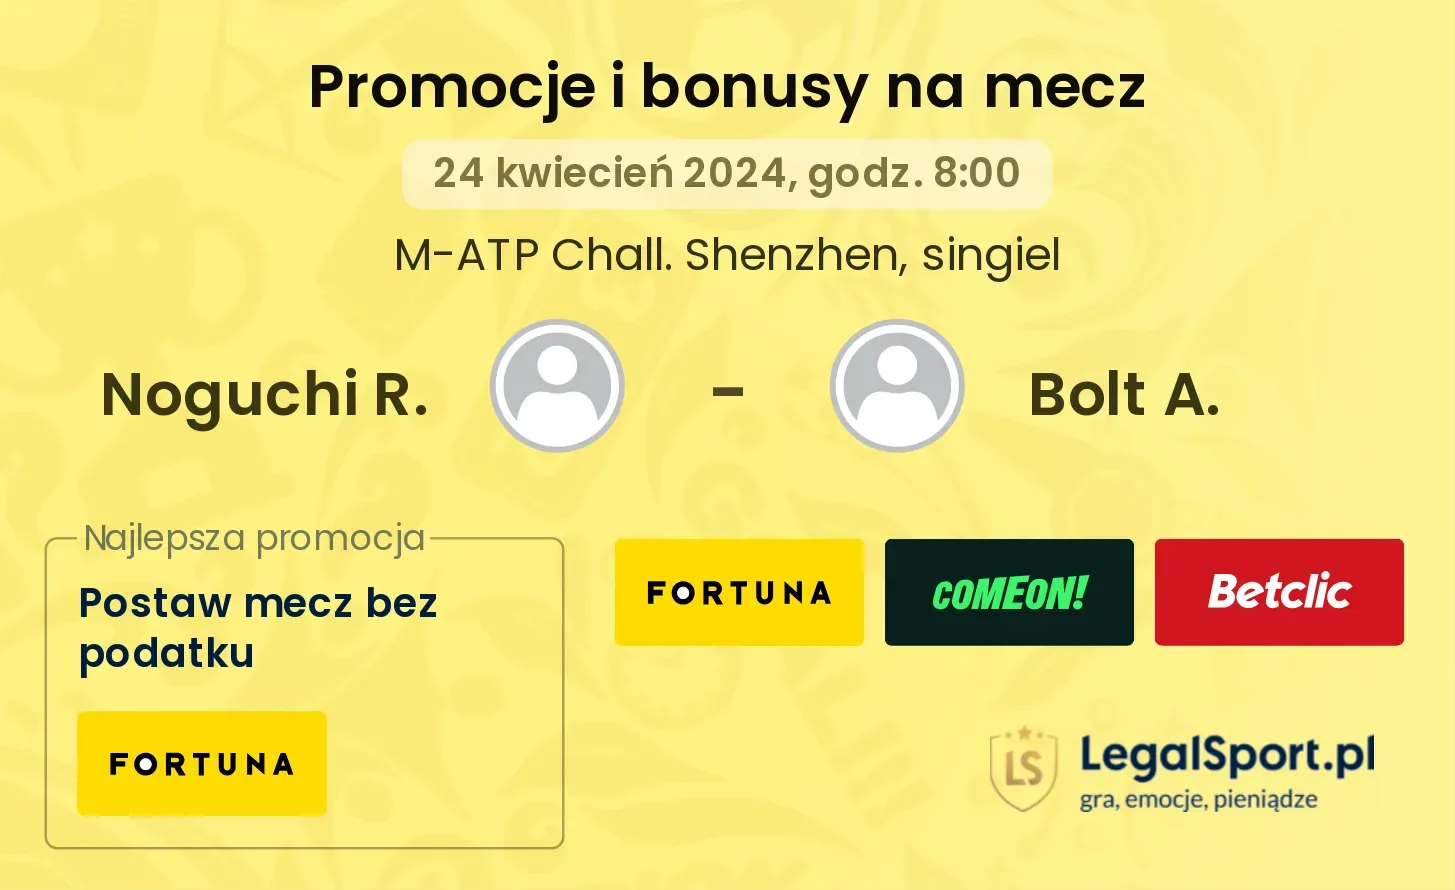 Noguchi R. - Bolt A. promocje bonusy na mecz